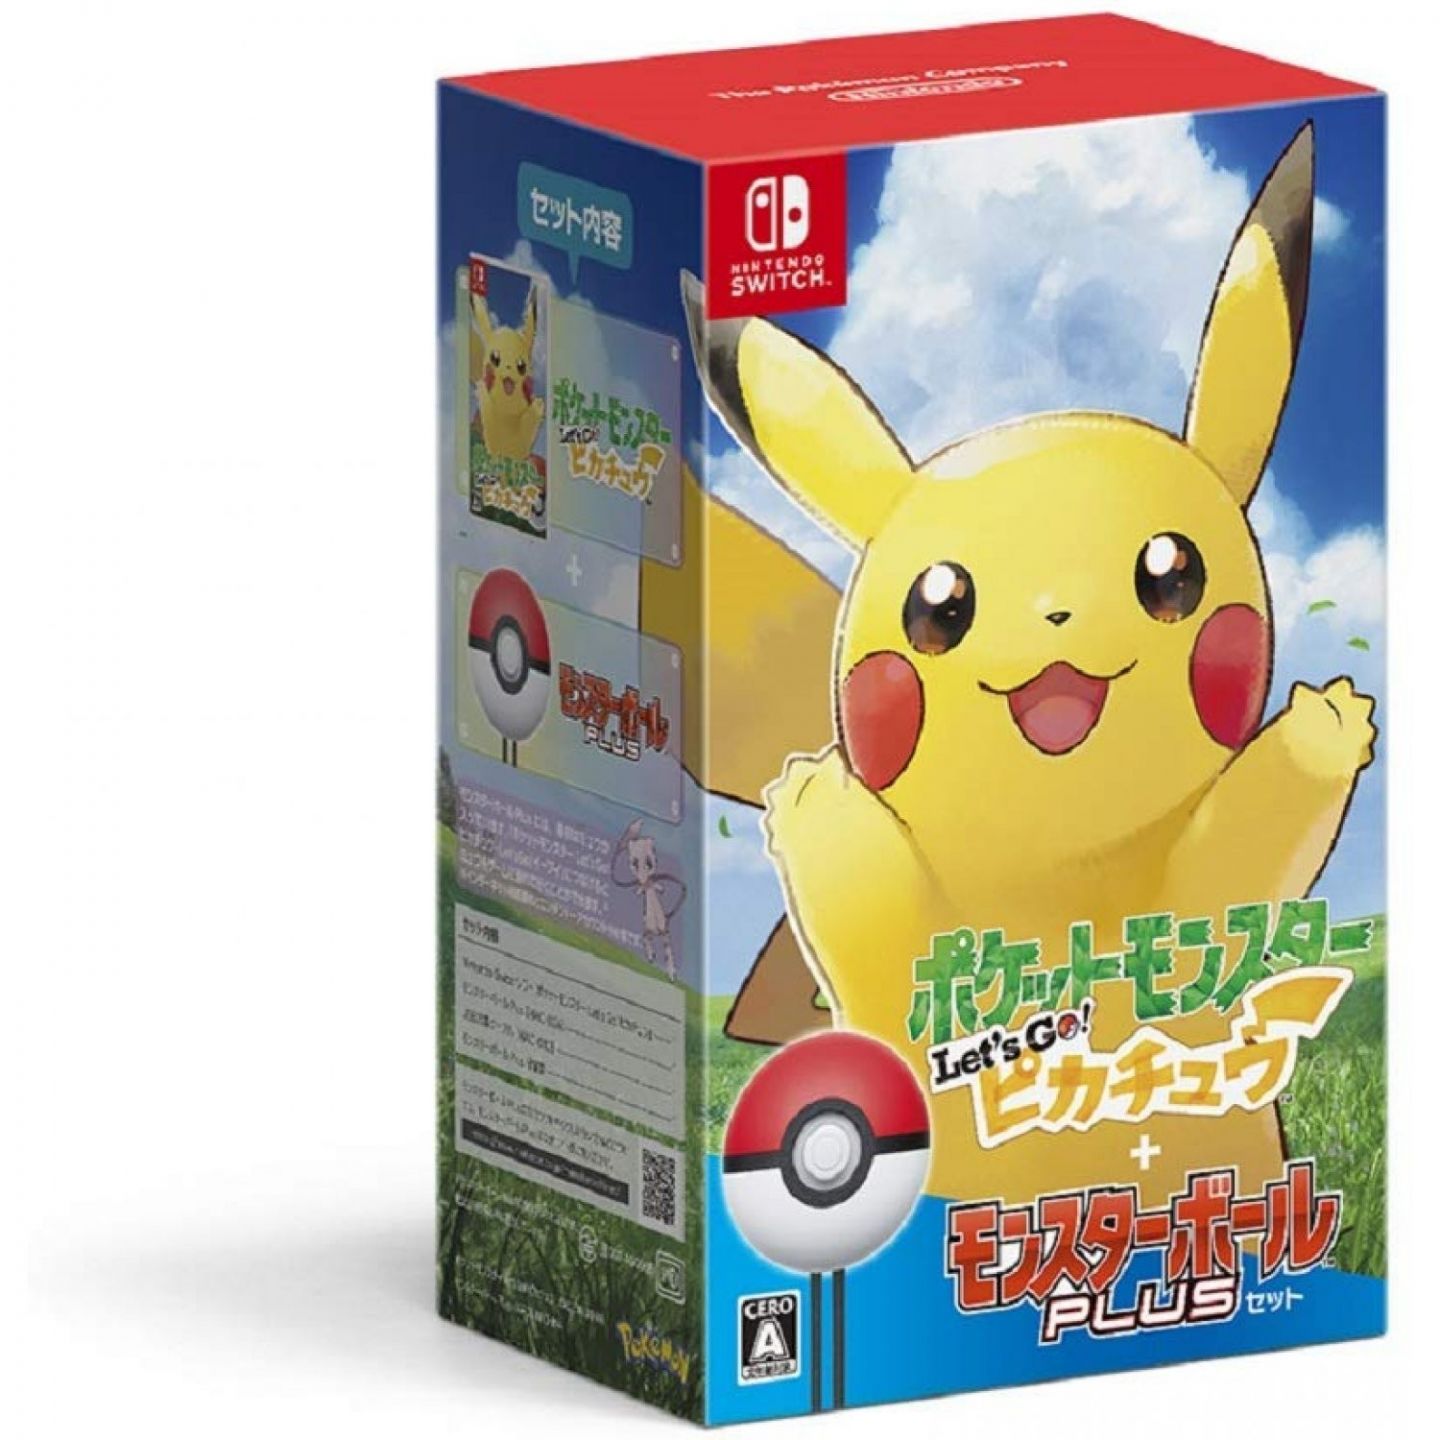 Pokémon™: Let's Go, Pikachu! for Nintendo Switch - Nintendo